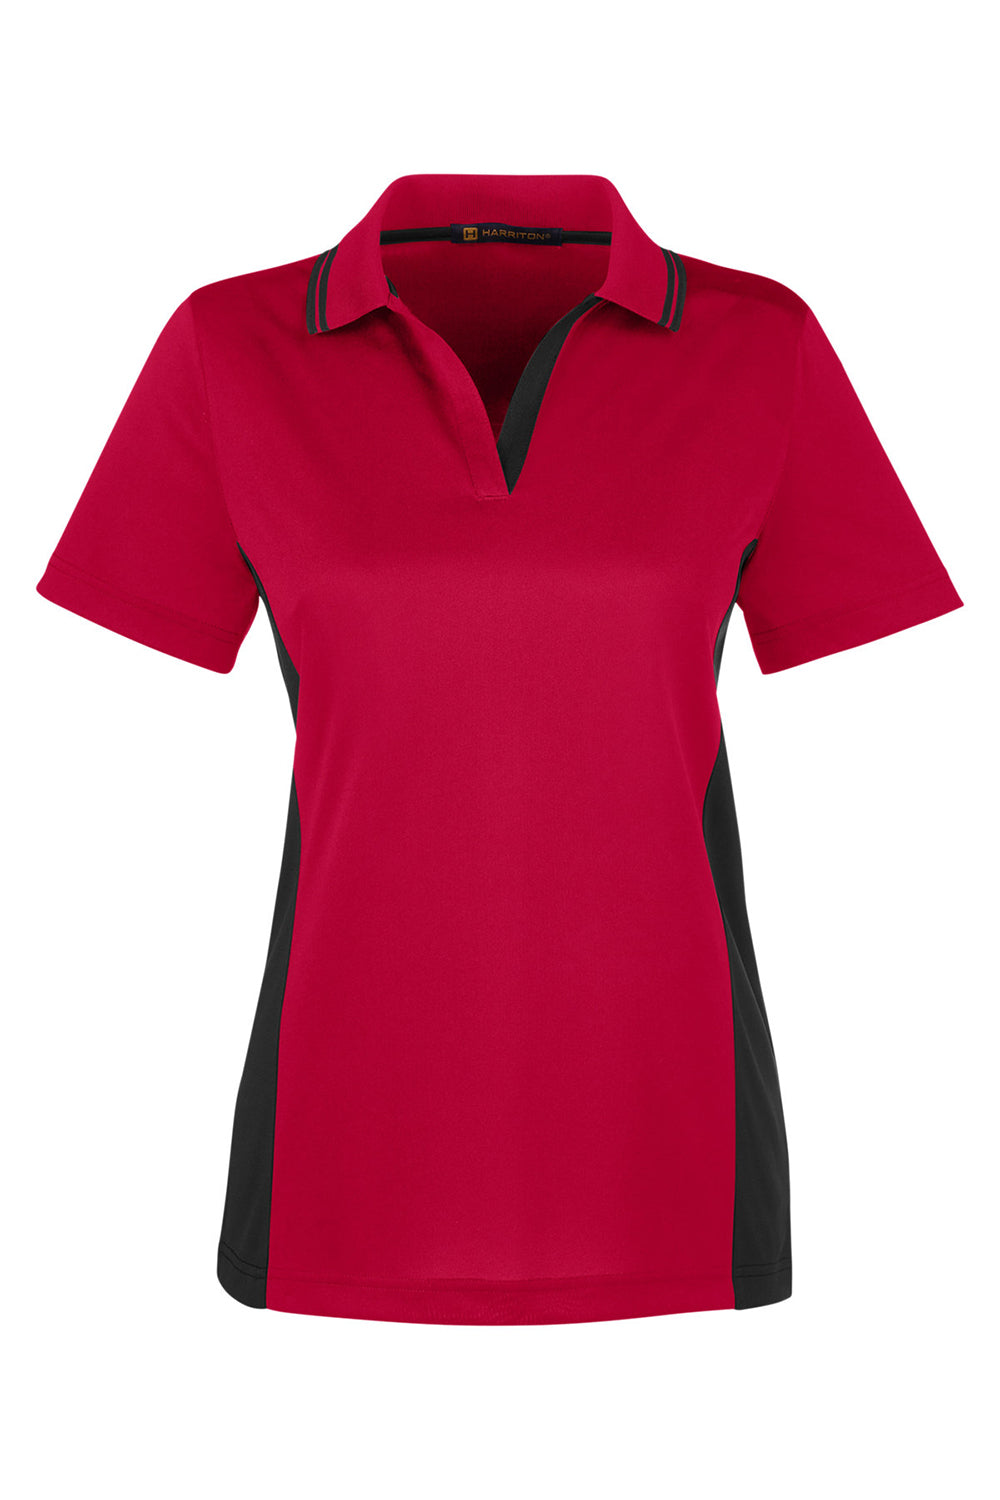 Harriton M386W Womens Flash Performance Moisture Wicking Colorblock Short Sleeve Polo Shirt Red/Black Flat Front